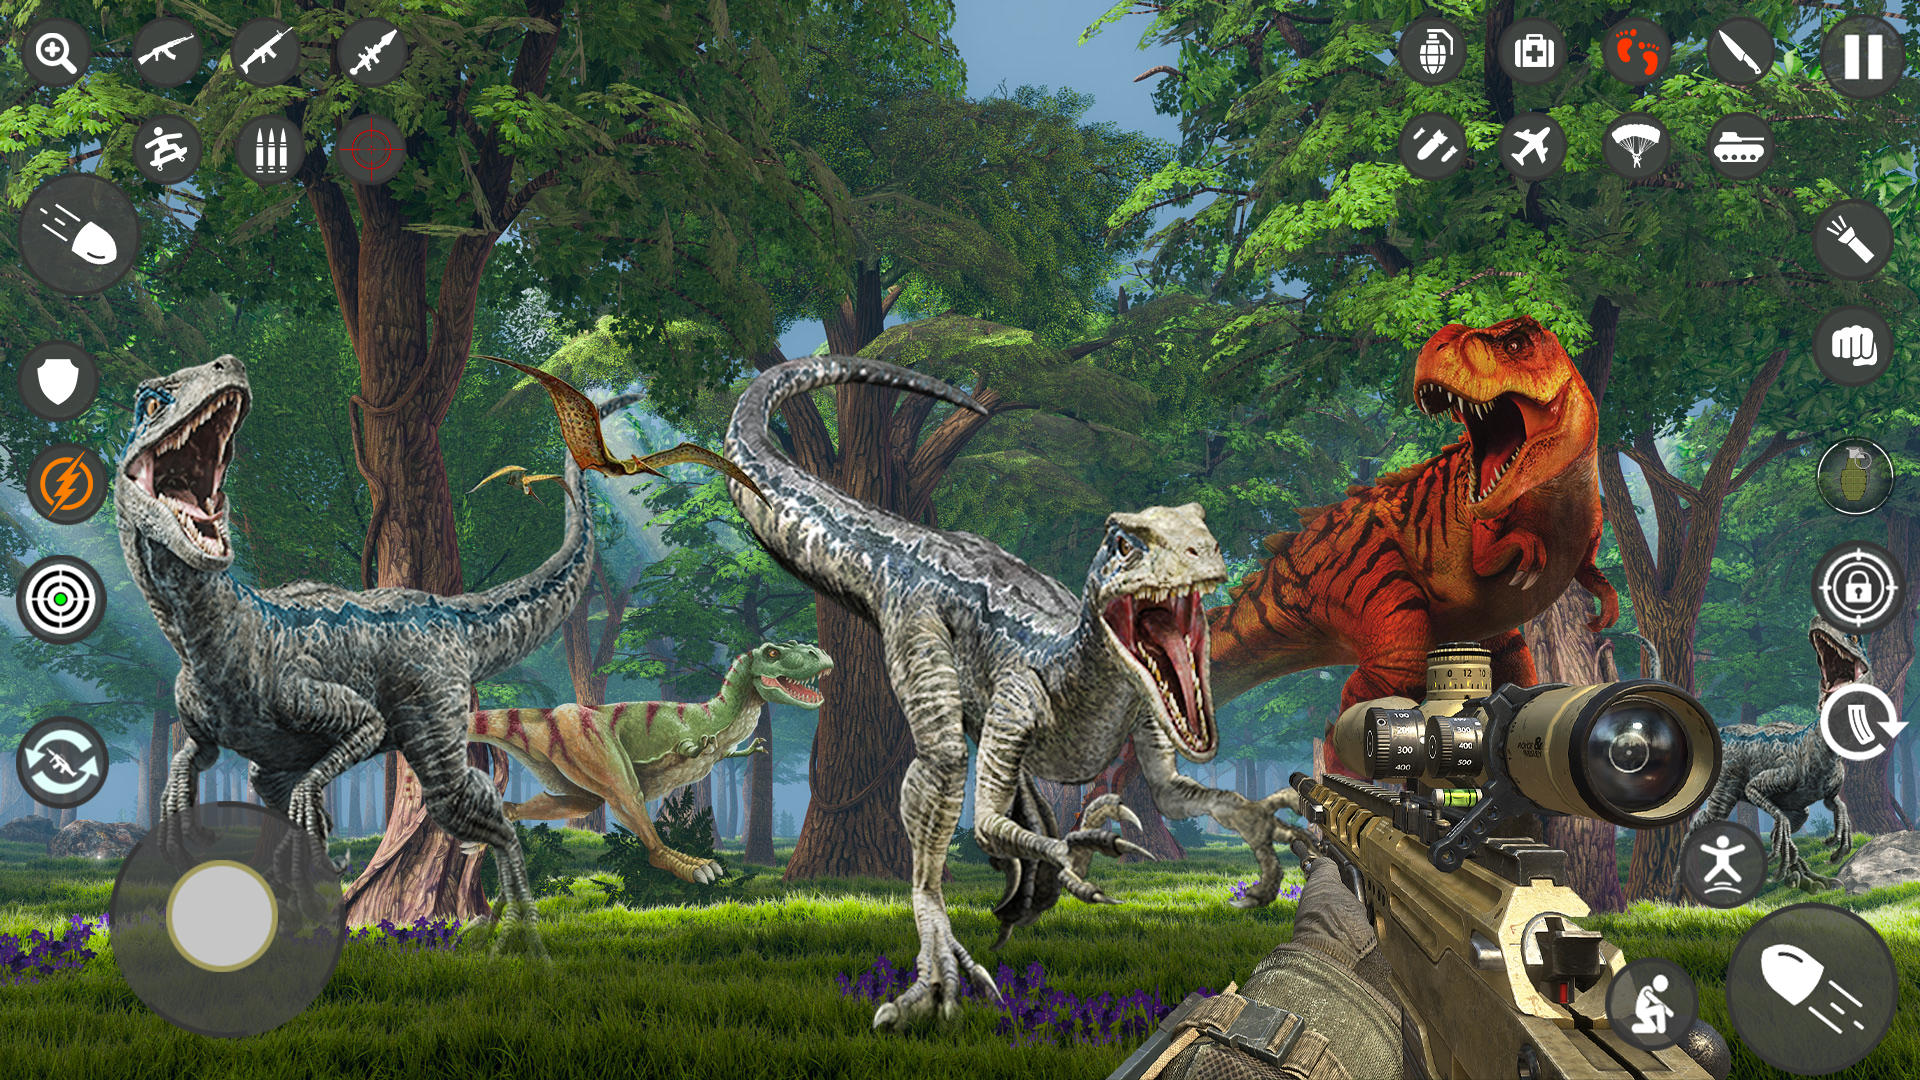 Dinosaur Hunter Games 3D, Jungle Dino Survival Games, Free